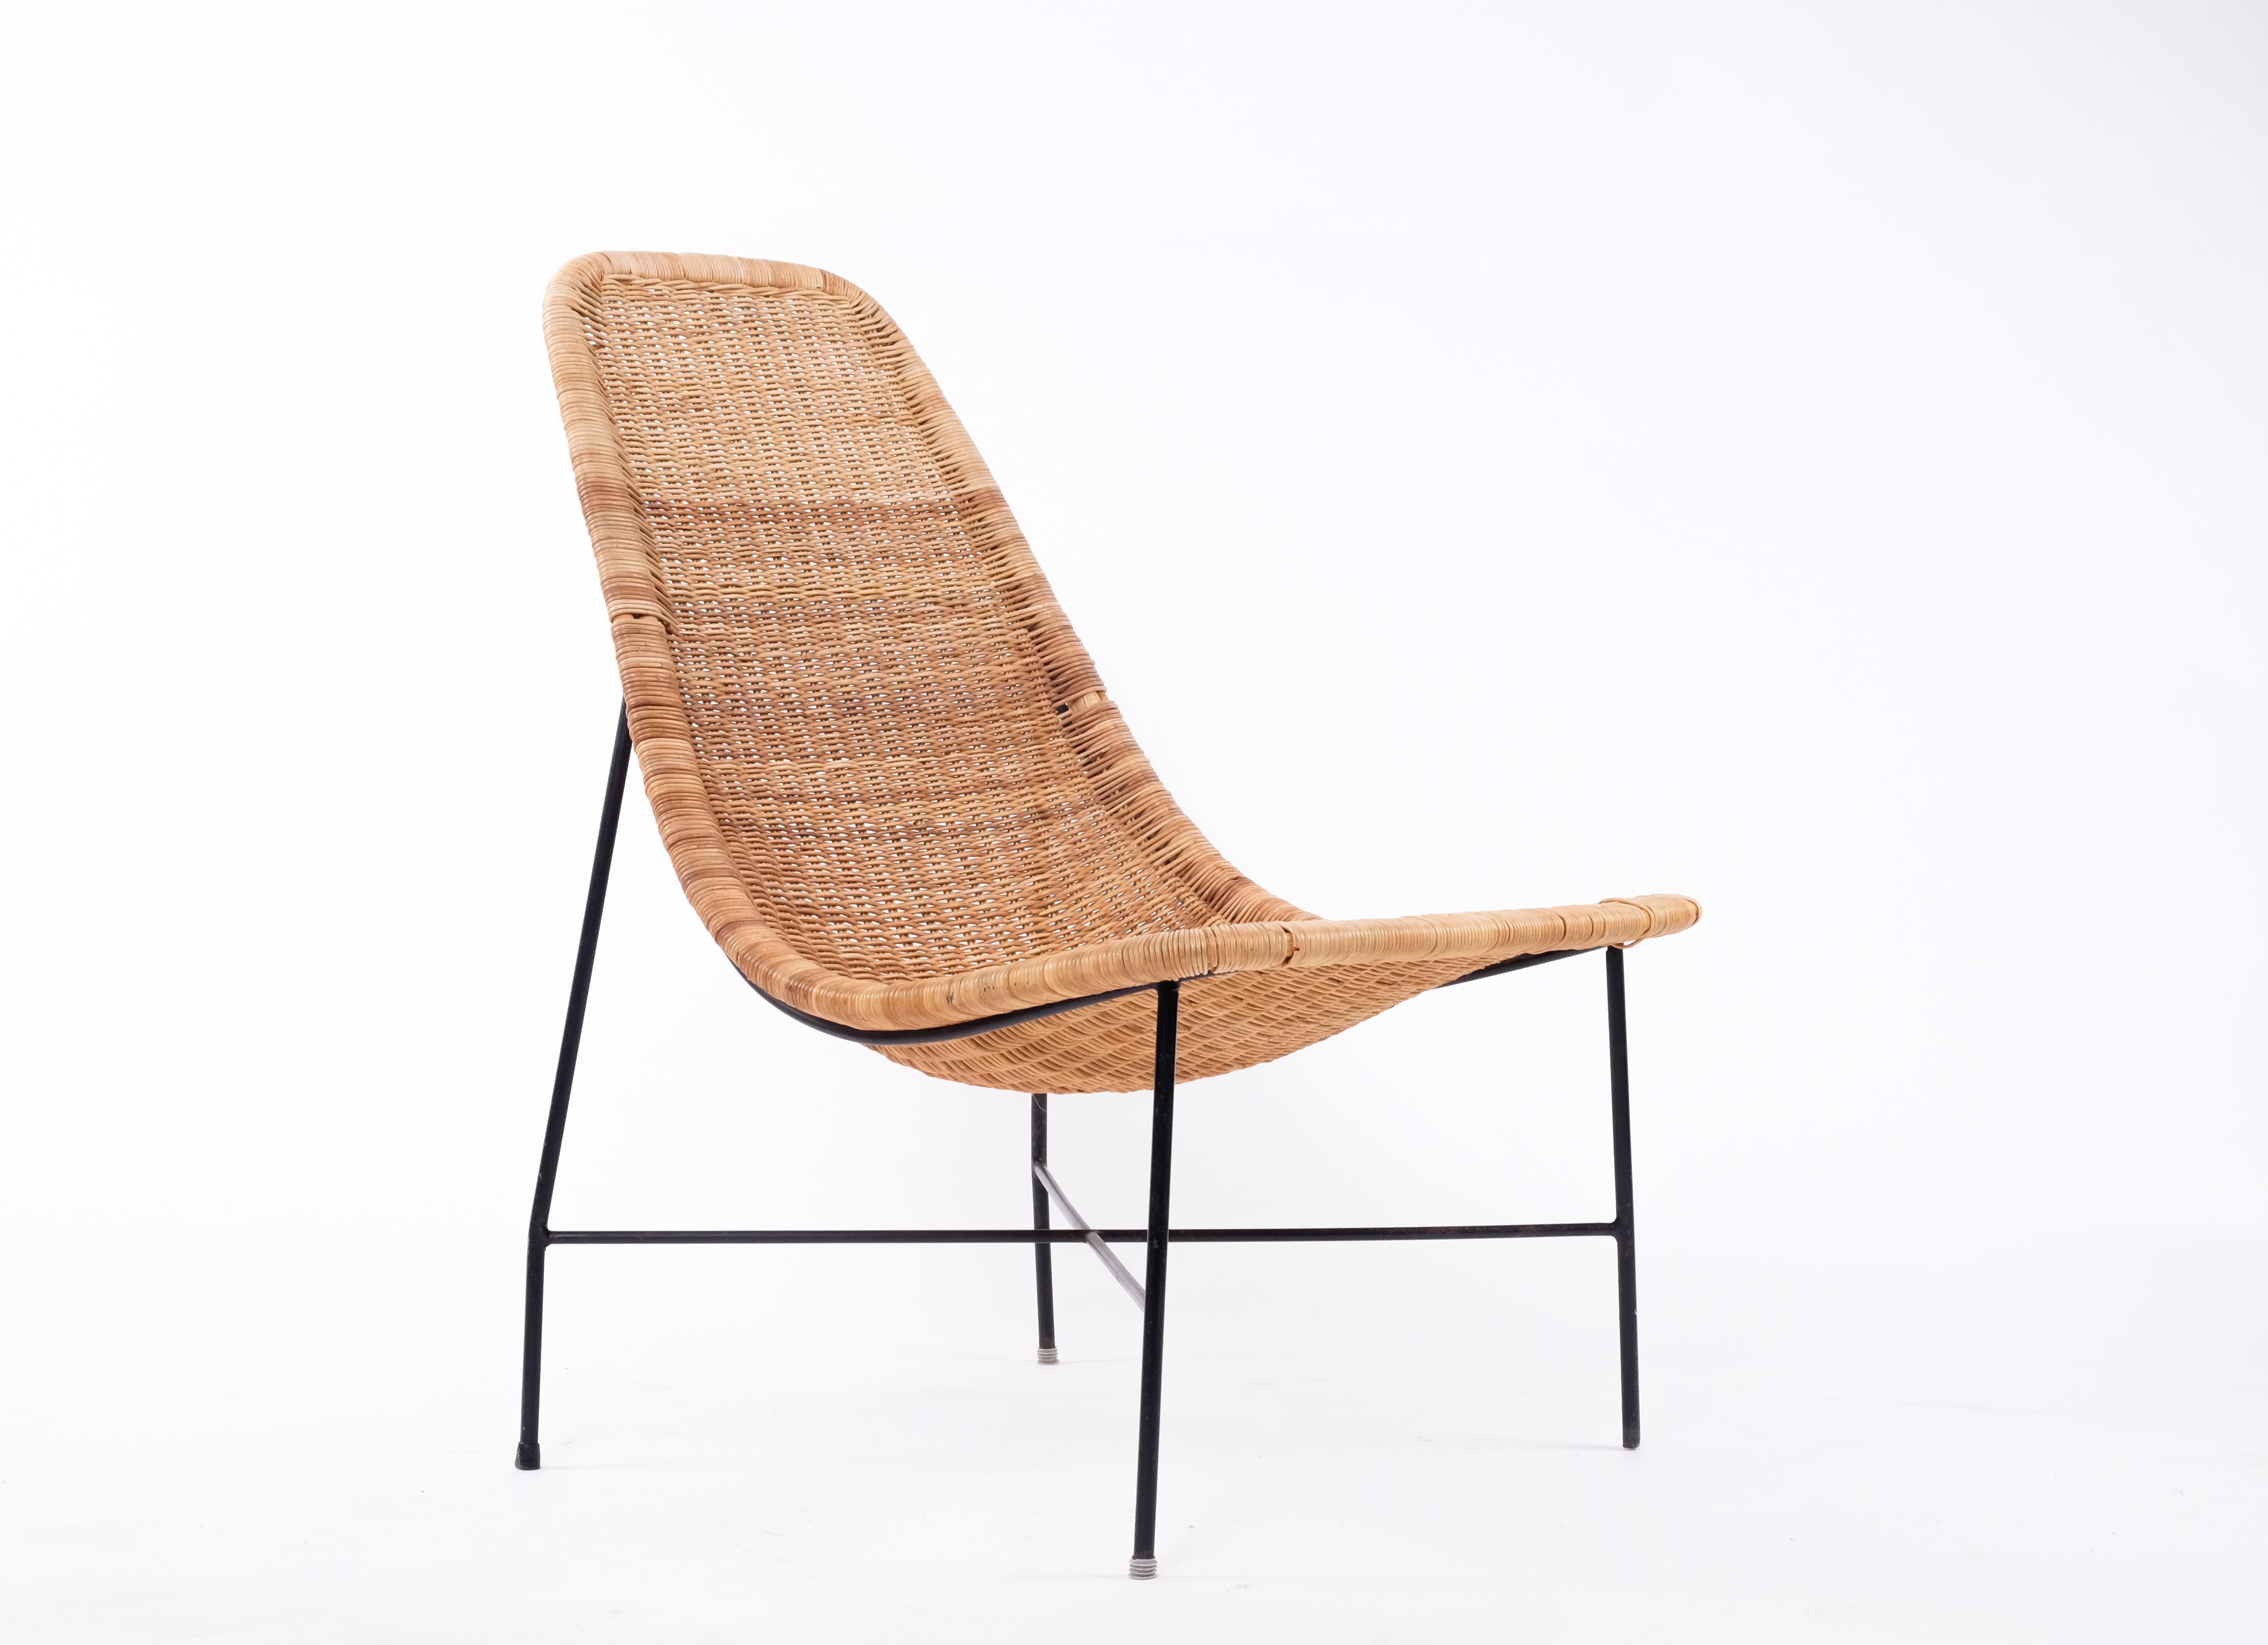 Steel Swedish Rattan Chair, 1960s